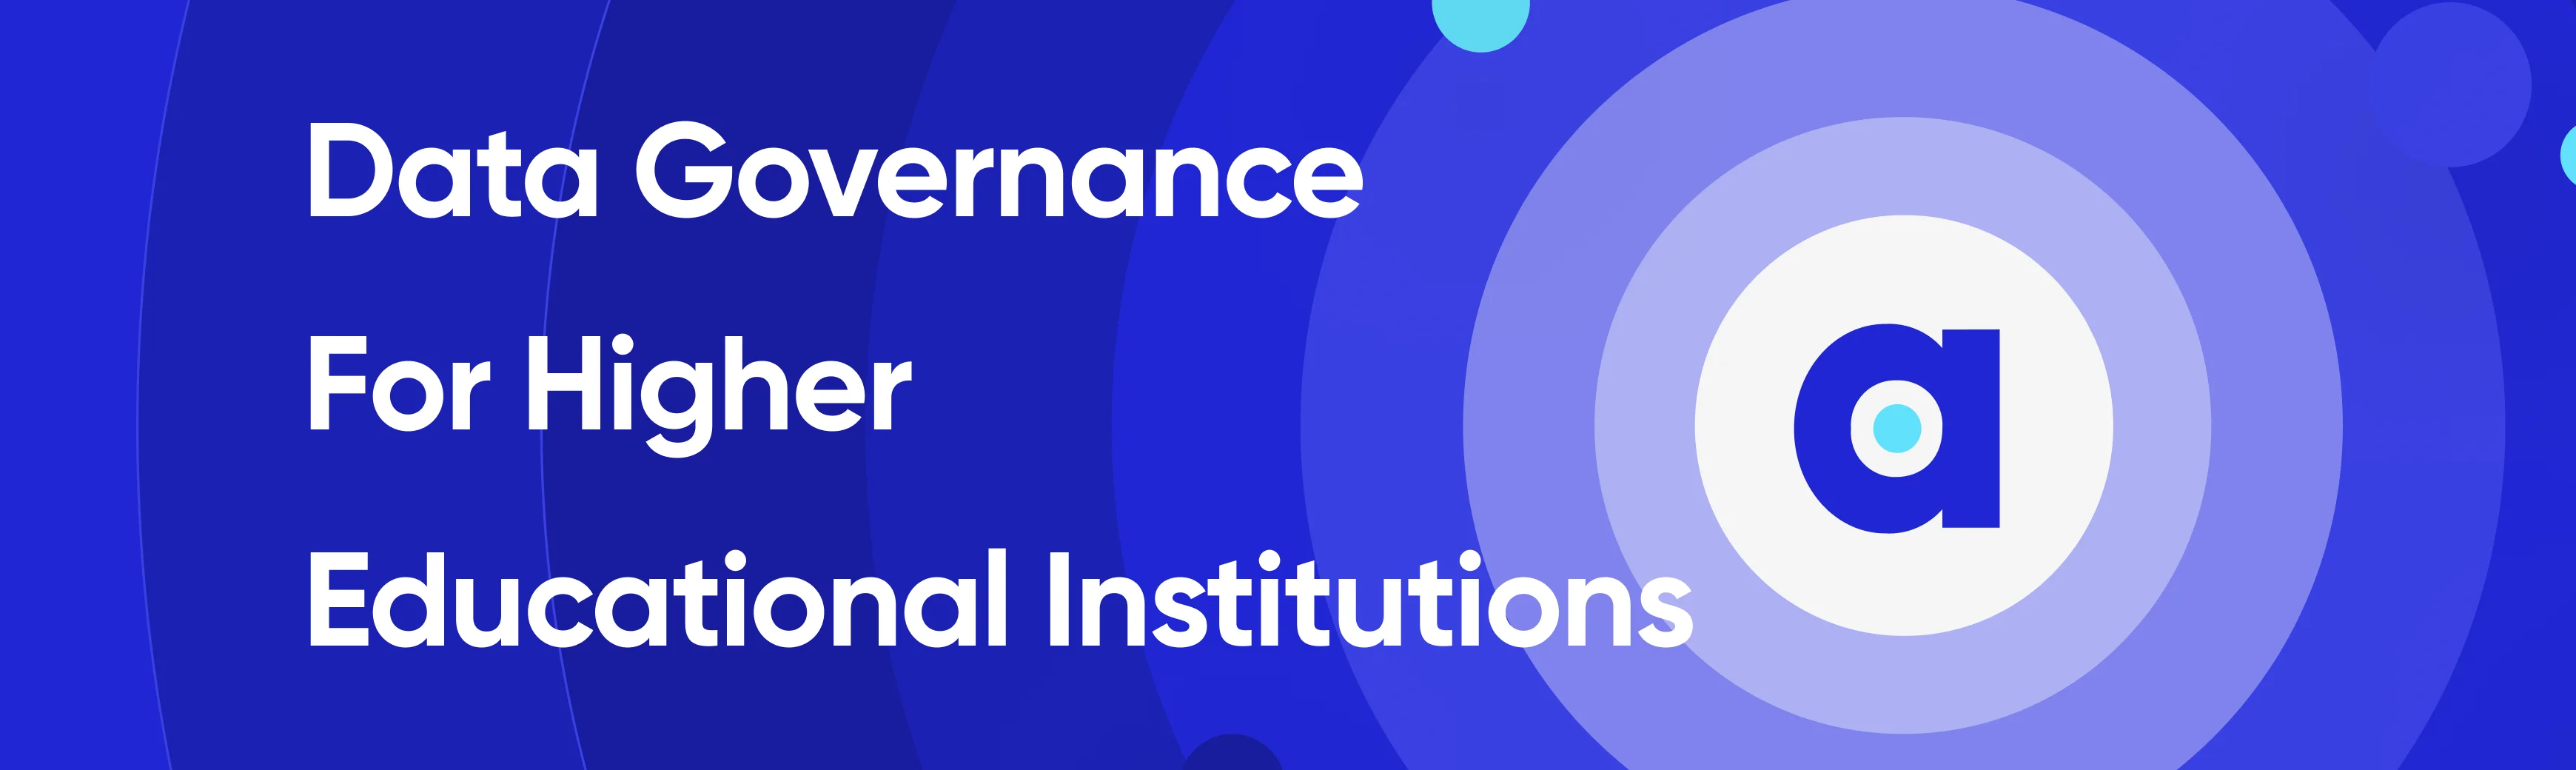 Data governance in higher educational institutions